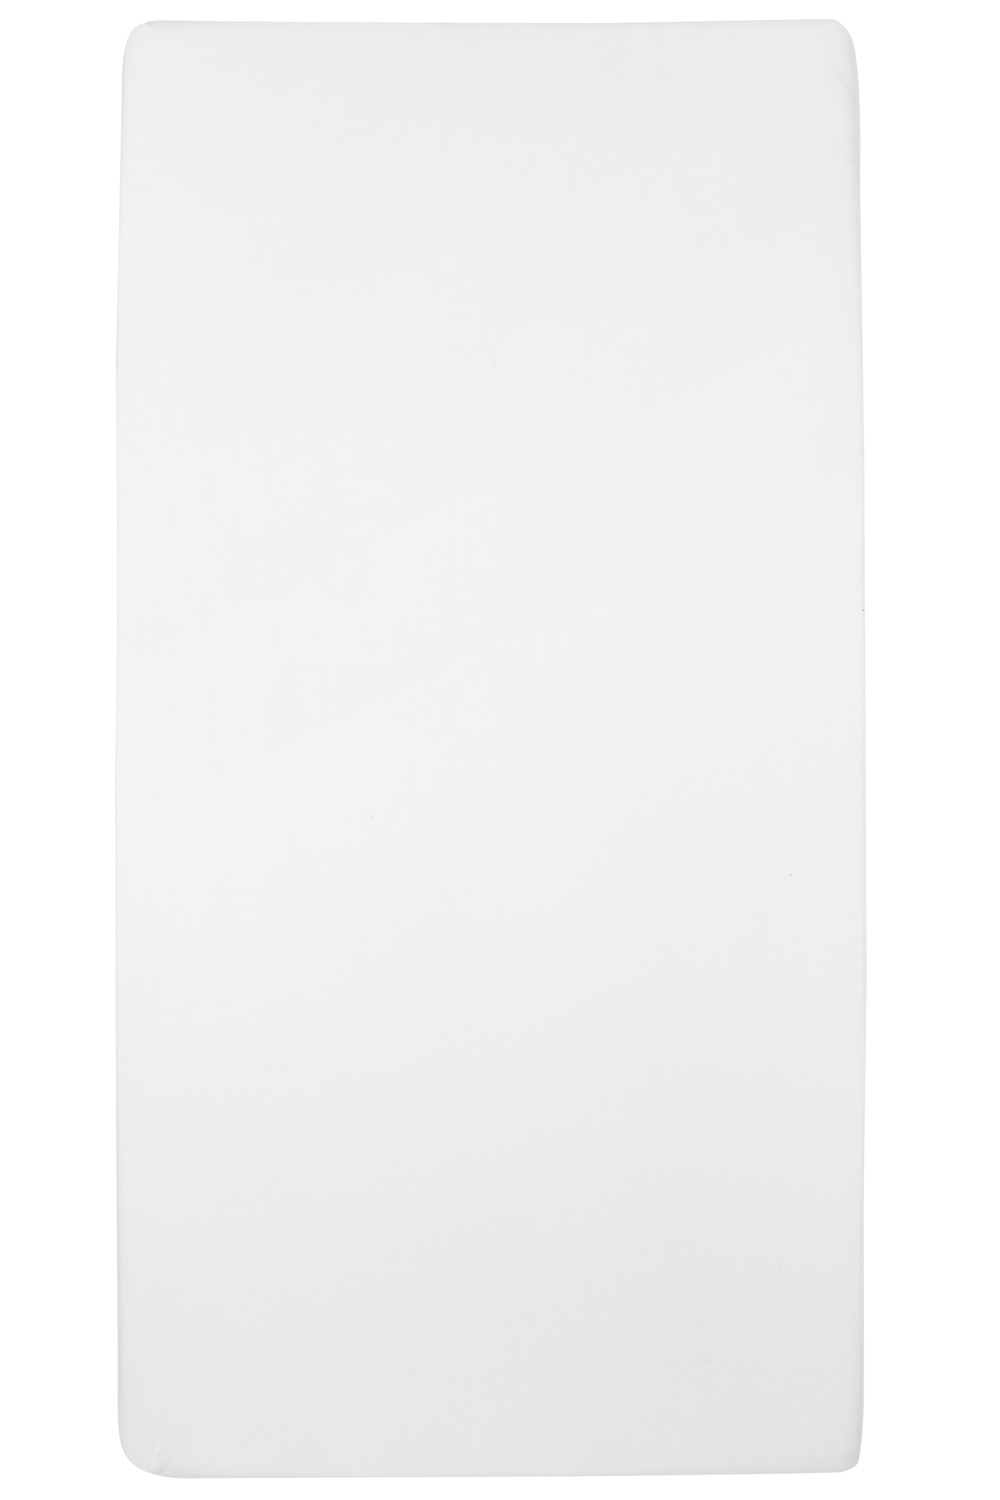 Hoeslaken tweepersoons Uni - white - 180x200cm